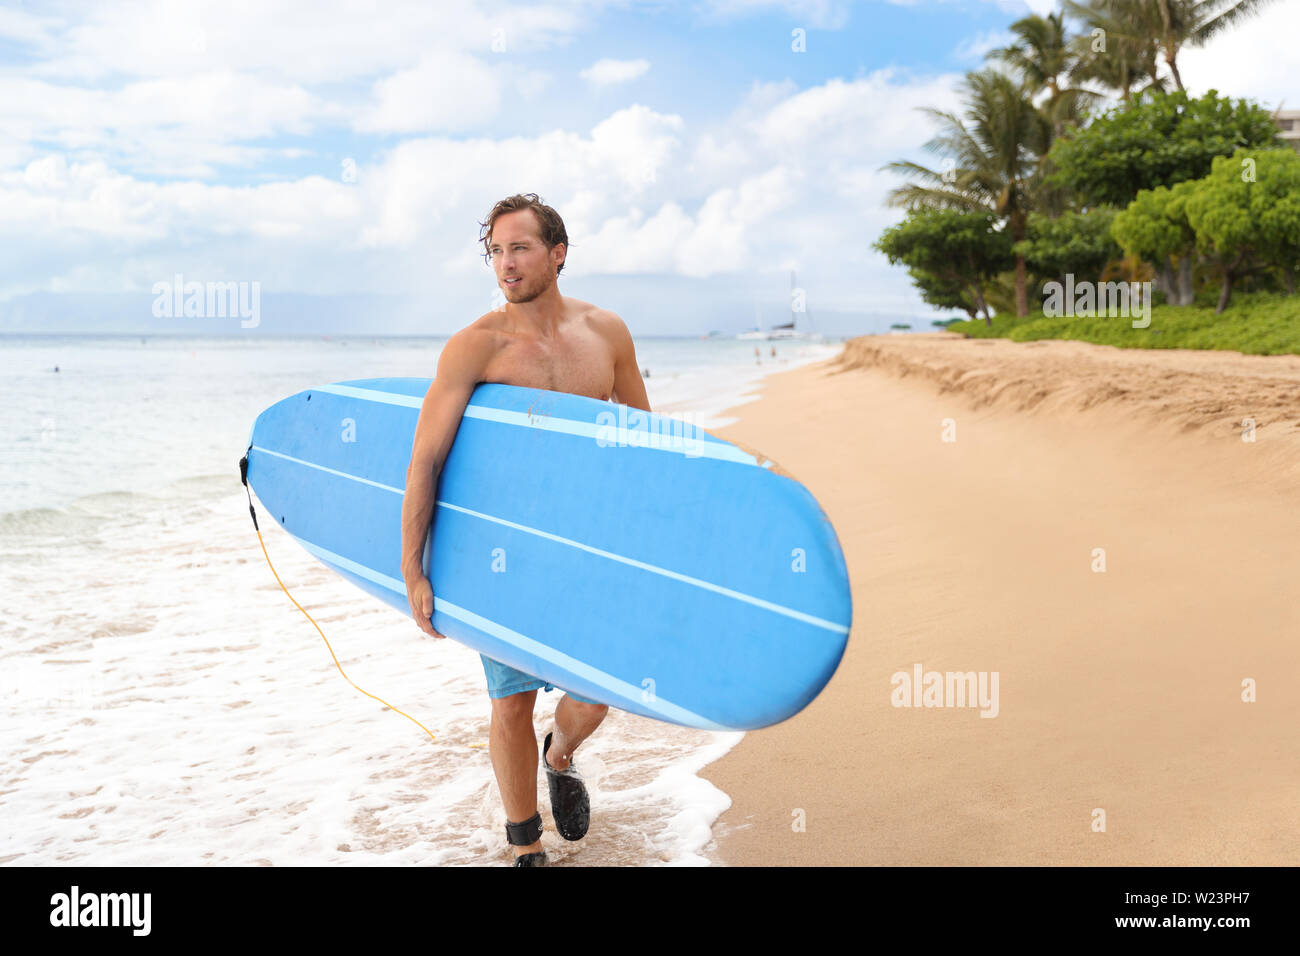 Hawaiian Man High Resolution Stock Photography and Images - Alamy